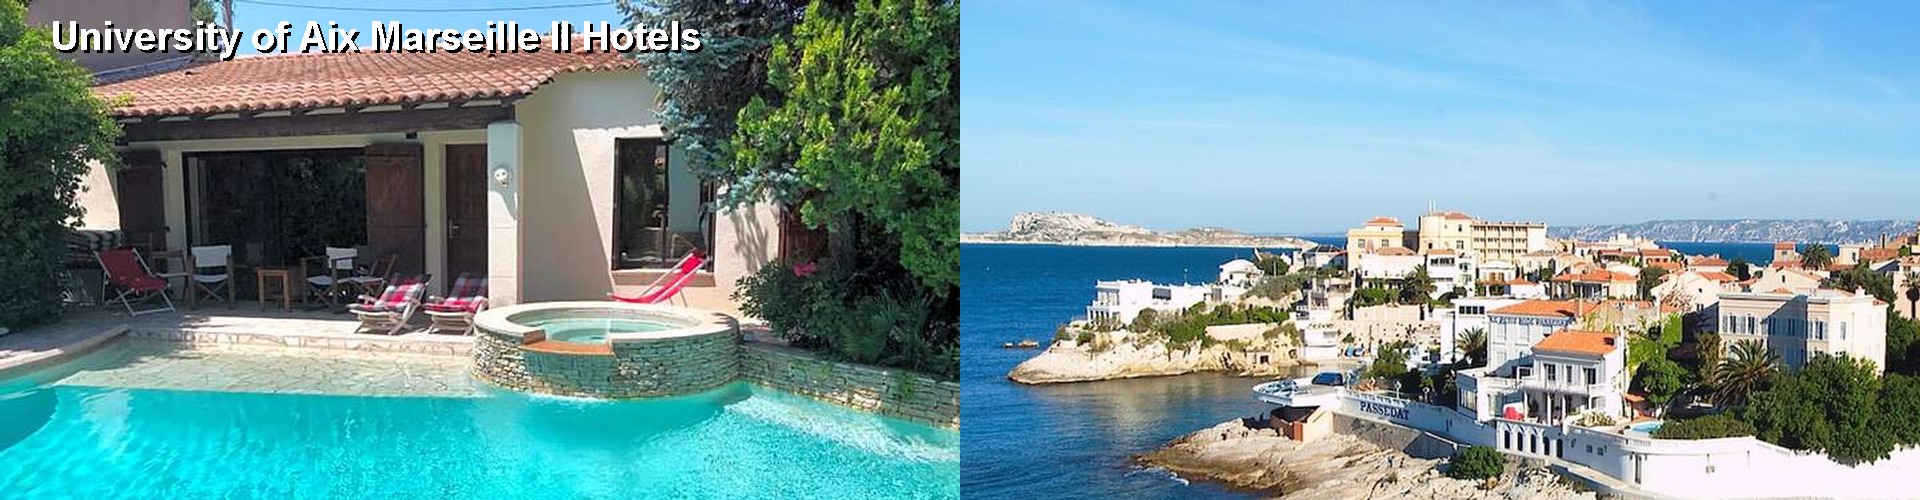 5 Best Hotels near University of Aix Marseille II